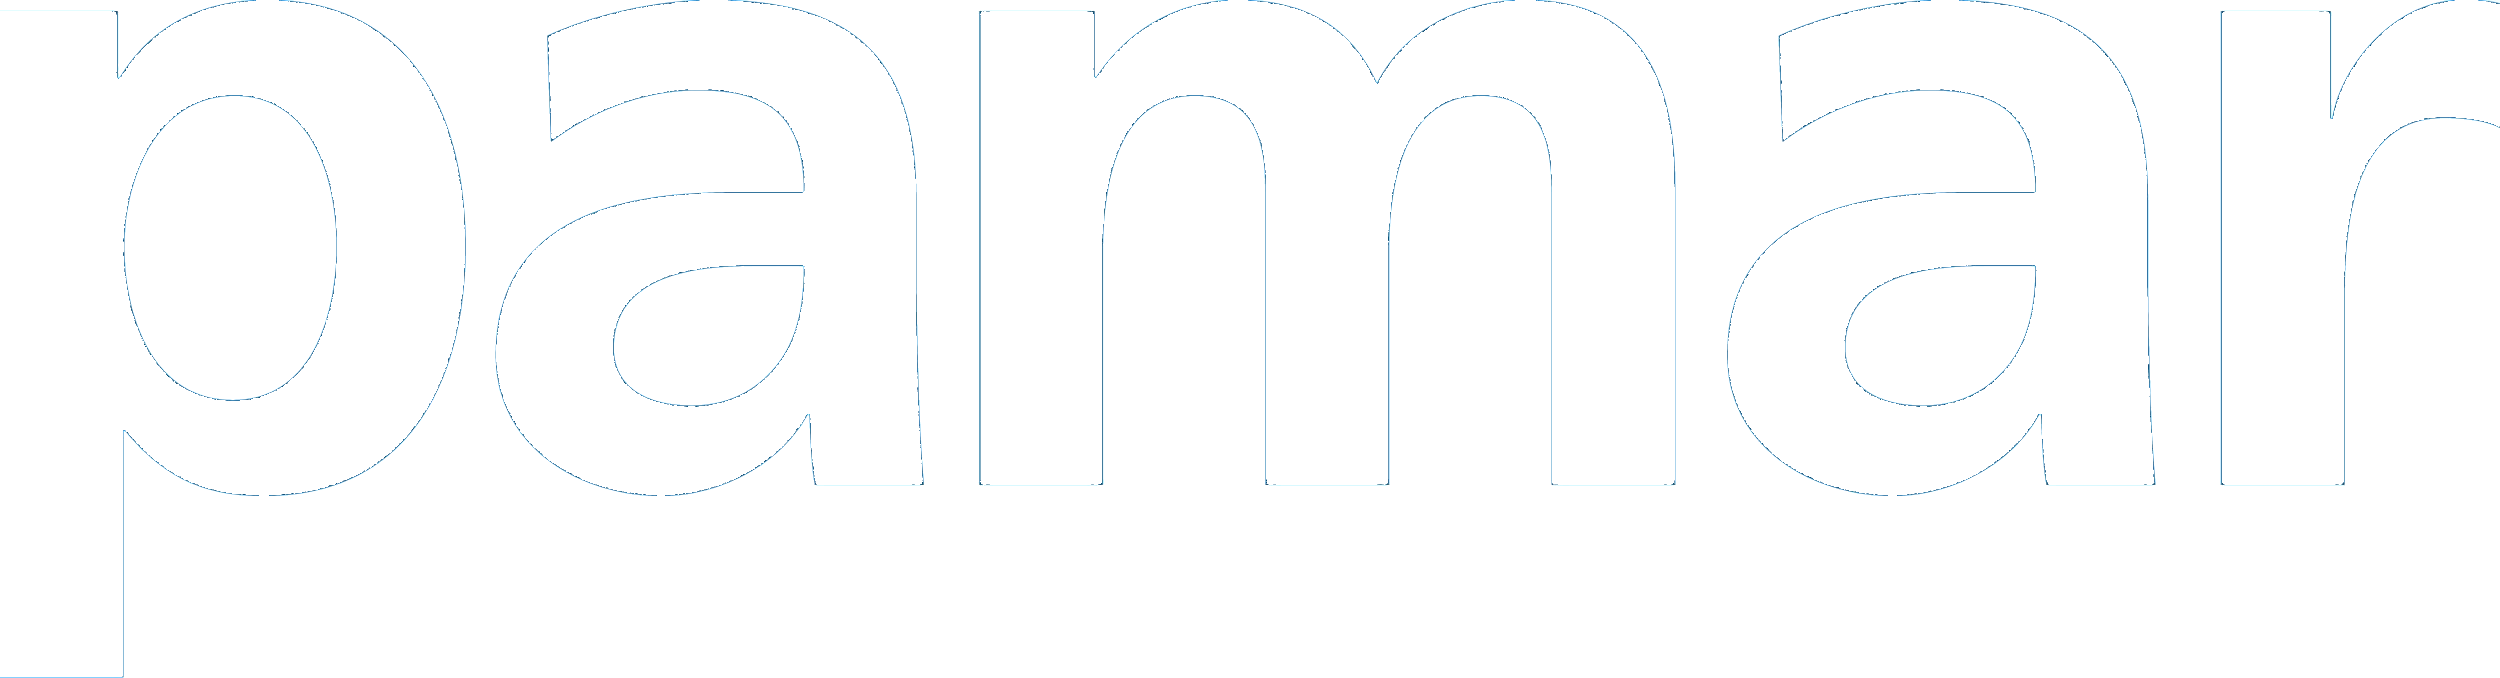 mital logo